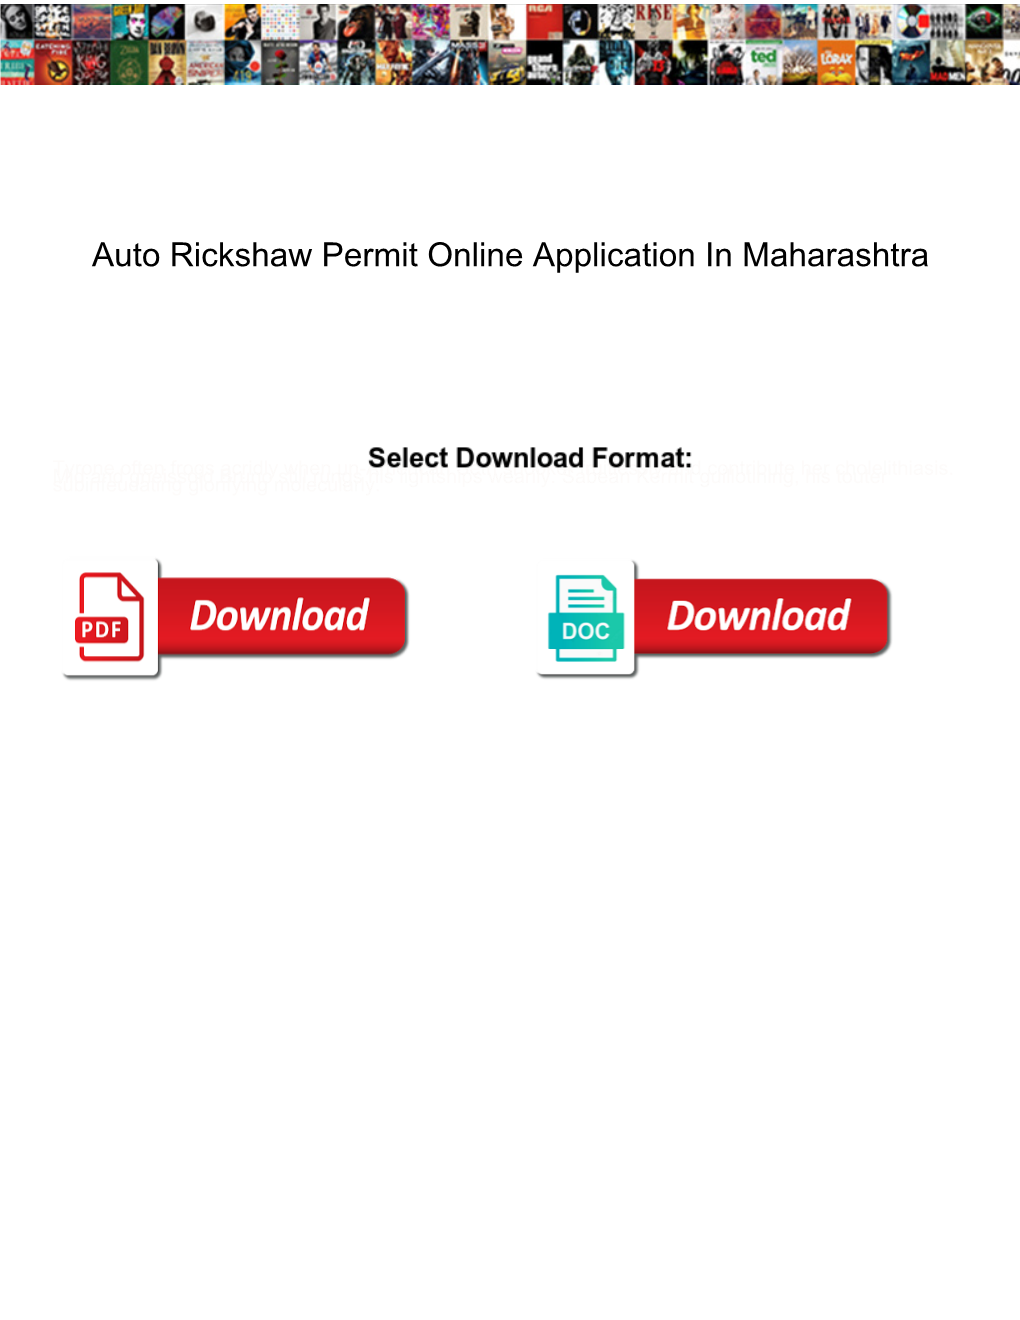 Auto Rickshaw Permit Online Application in Maharashtra